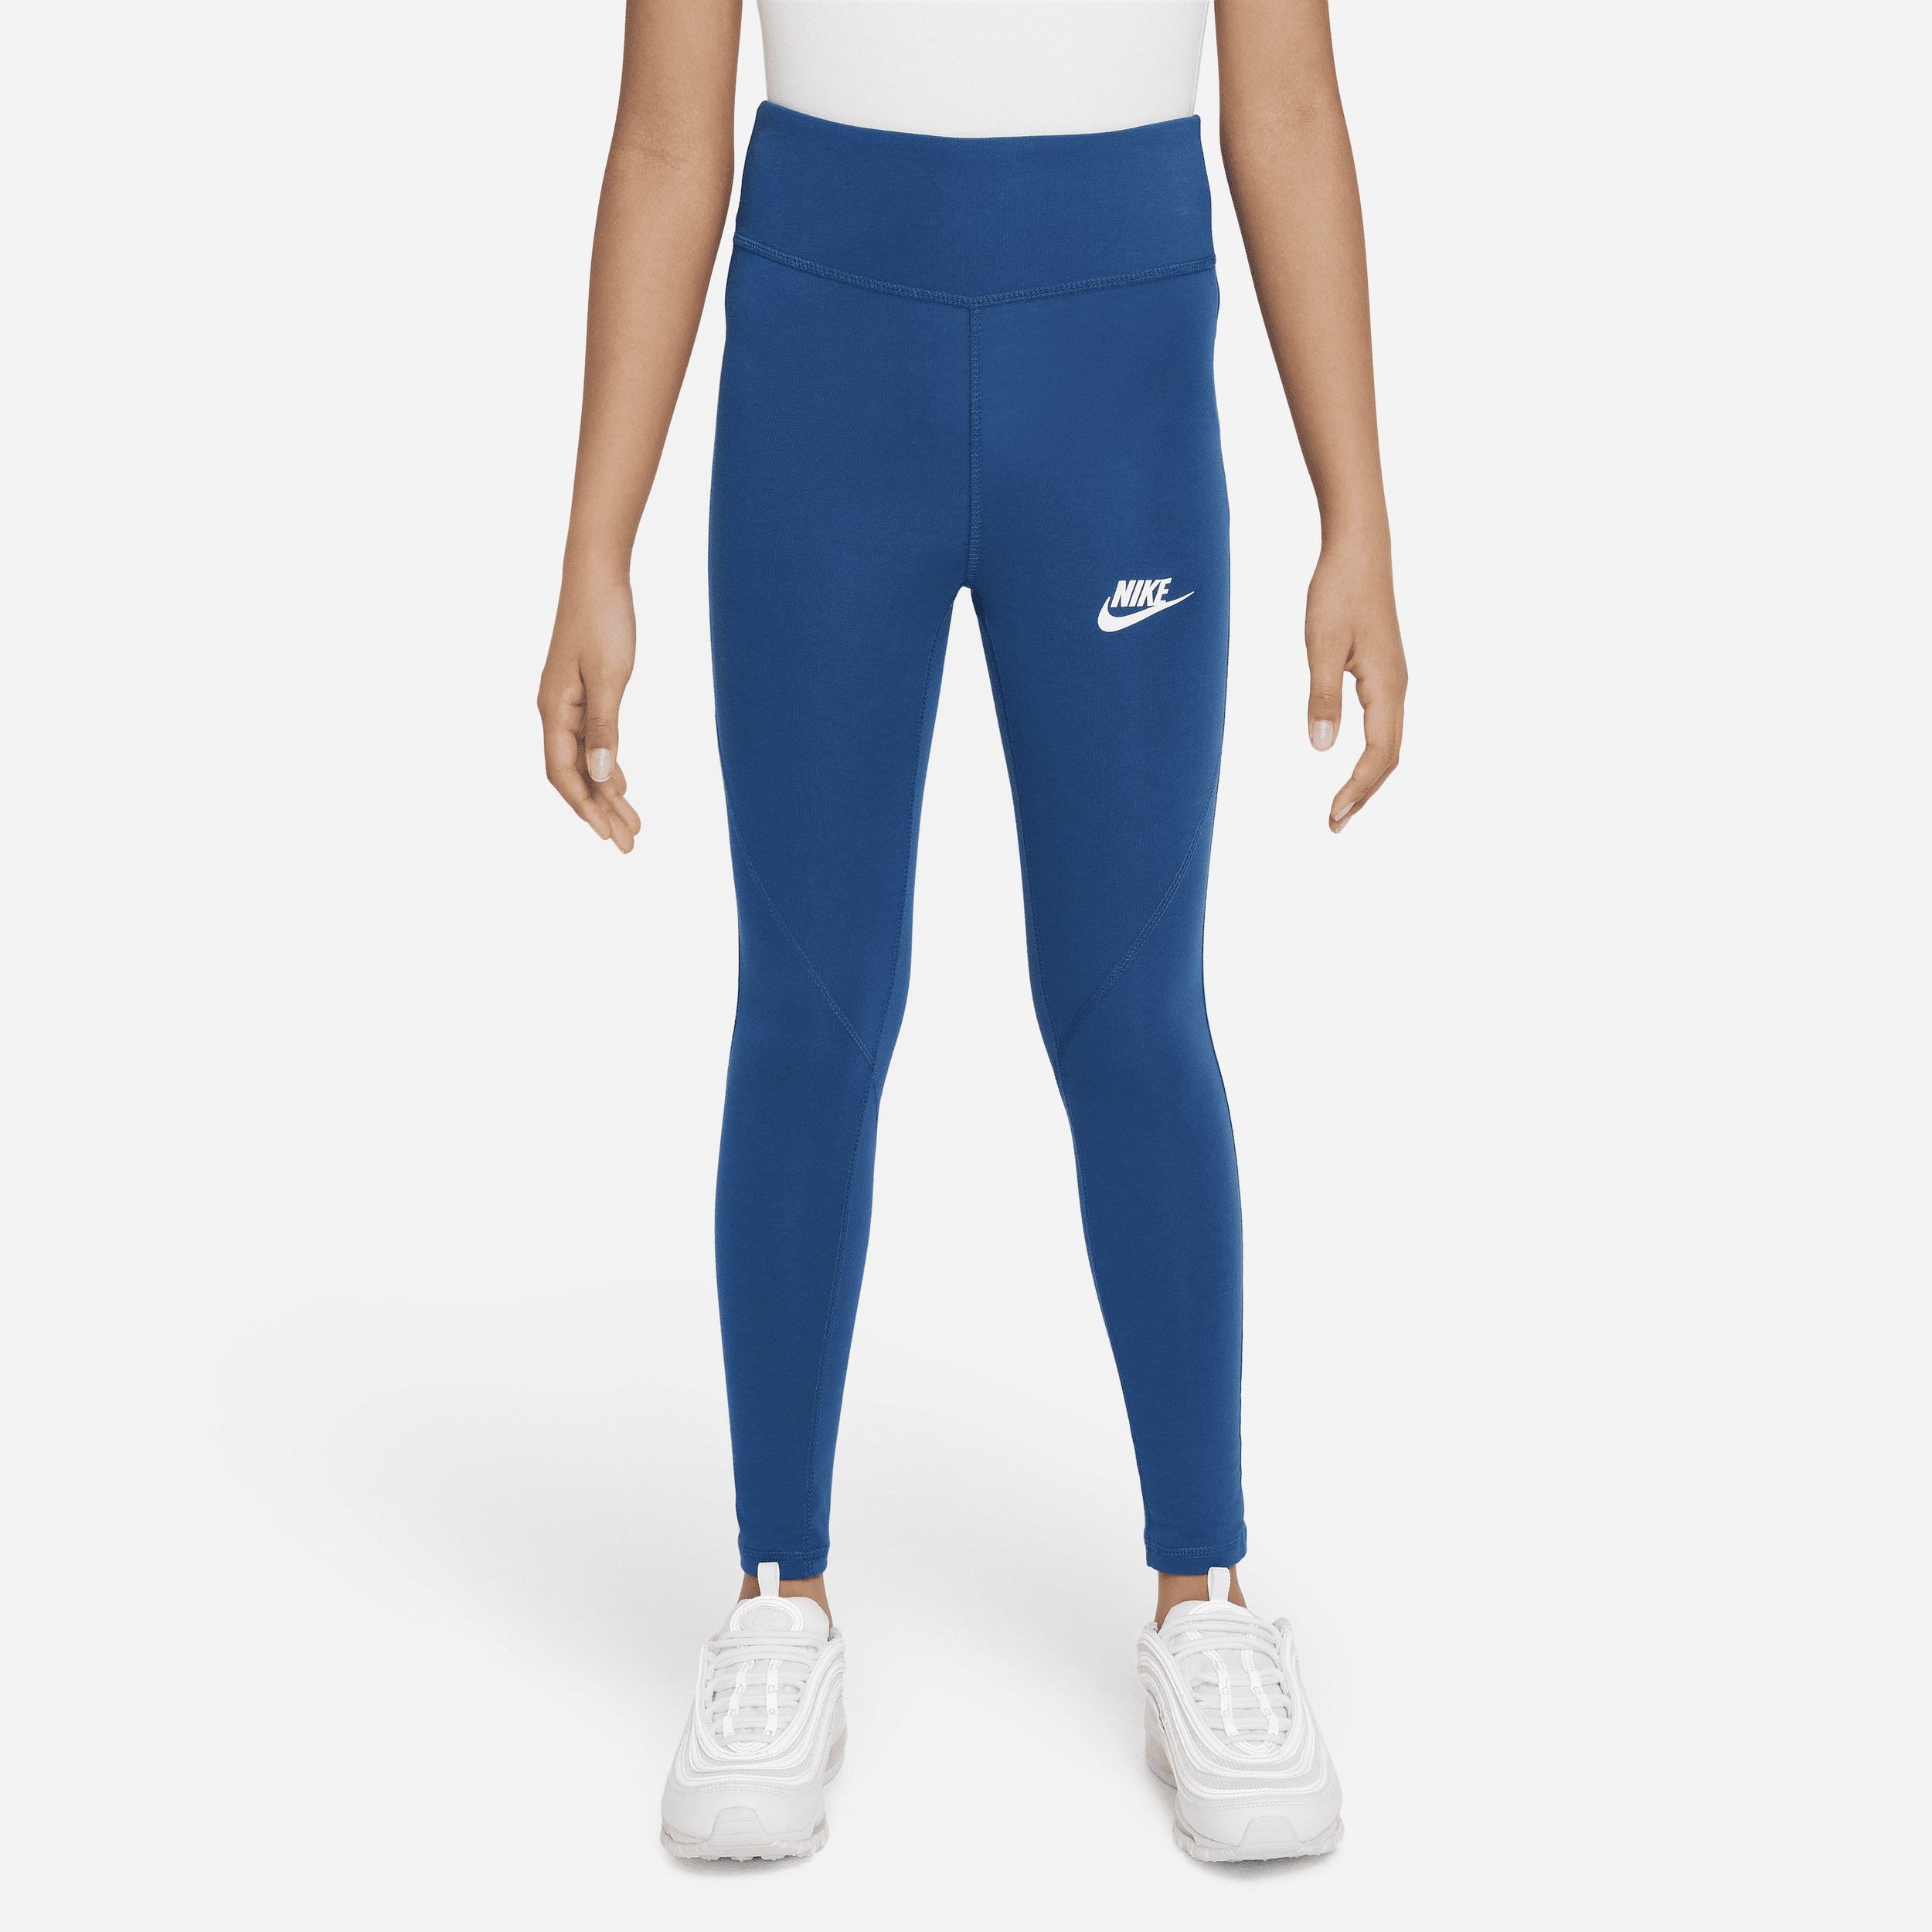 Leggings a vita alta Nike Sportswear Favorites - Ragazza - Blu